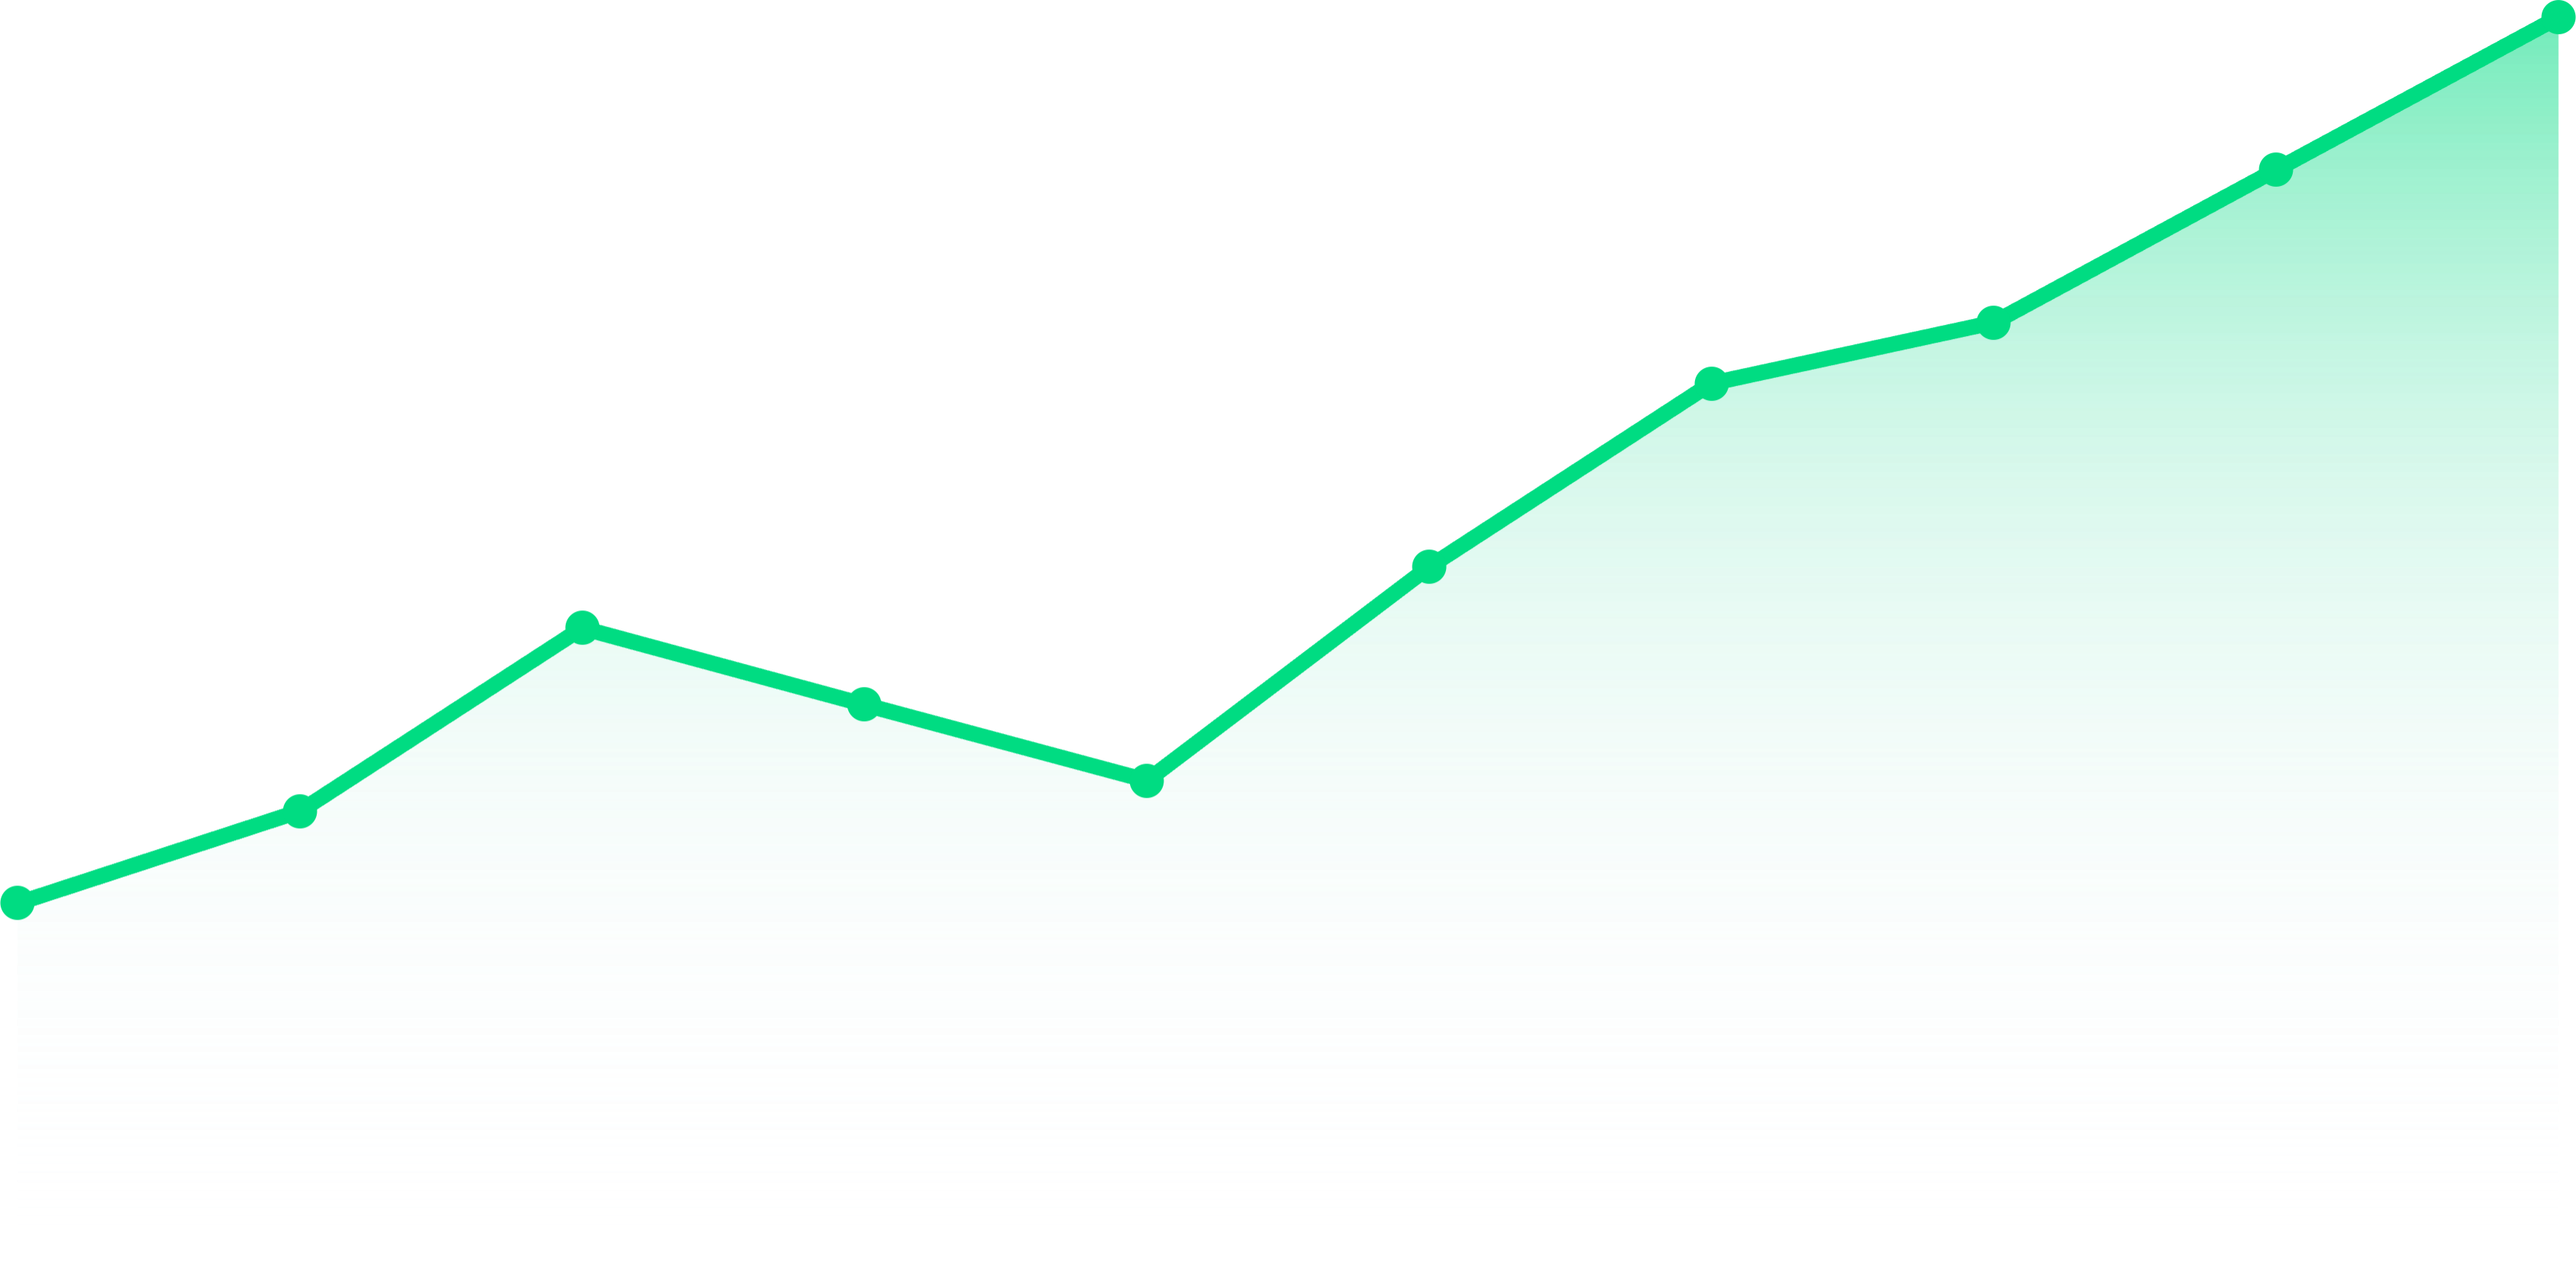 Consensys - Chart Demo - Line Chart Green